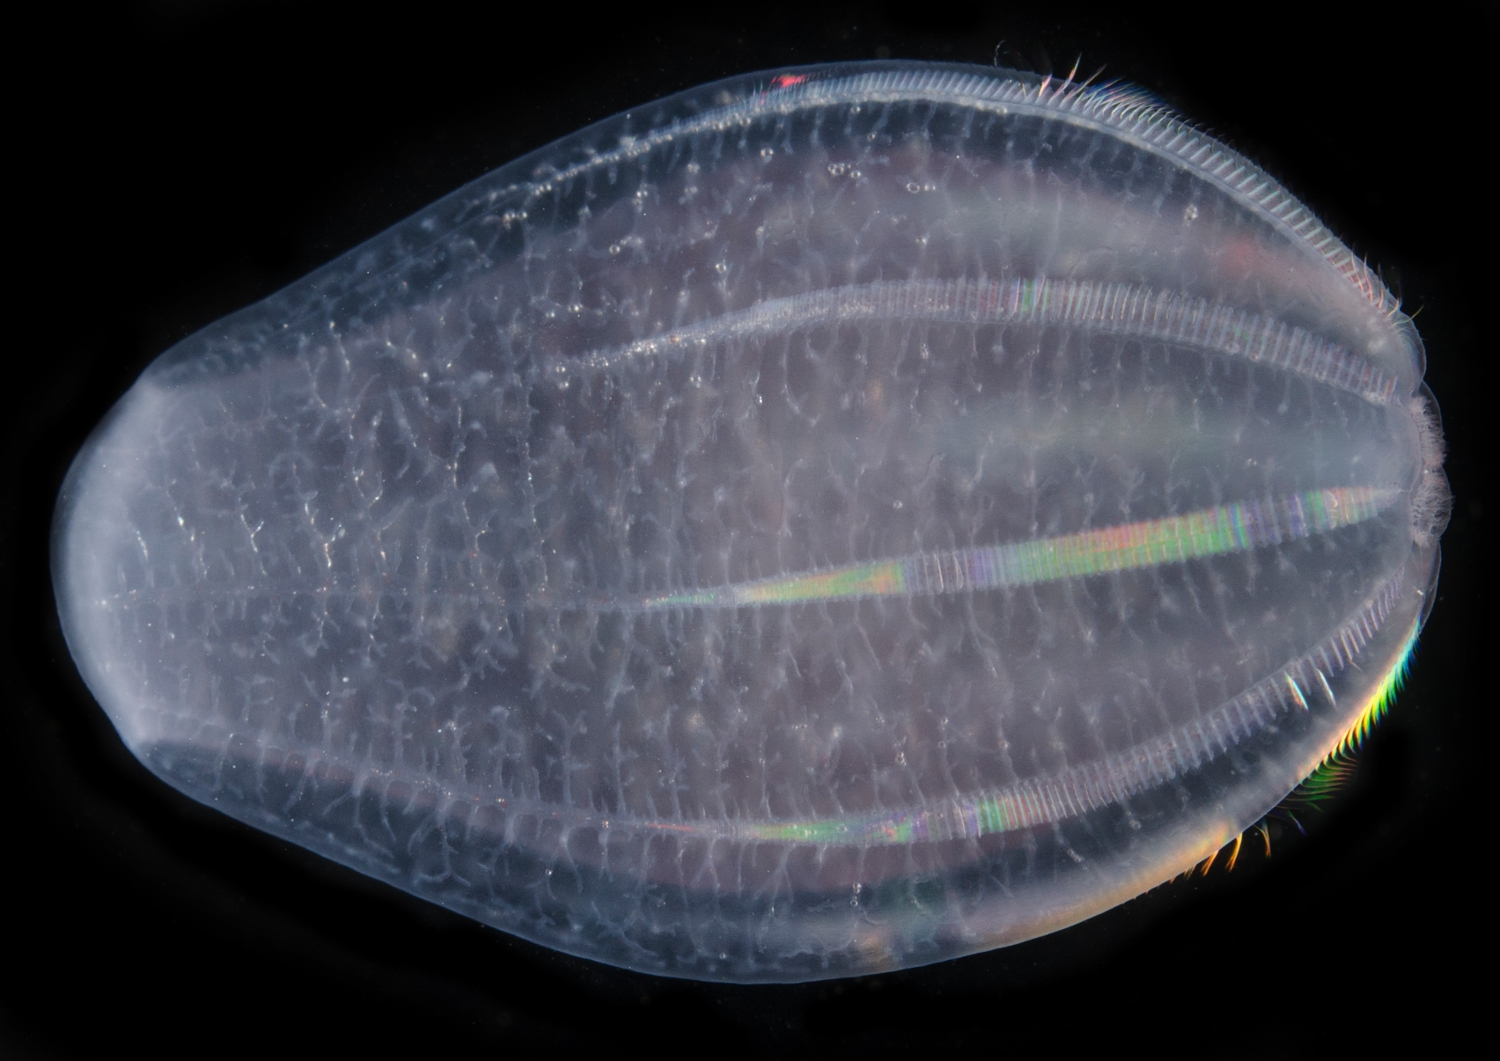 microscopic image of Beroe abyssicolo ctenophore or comb jelly